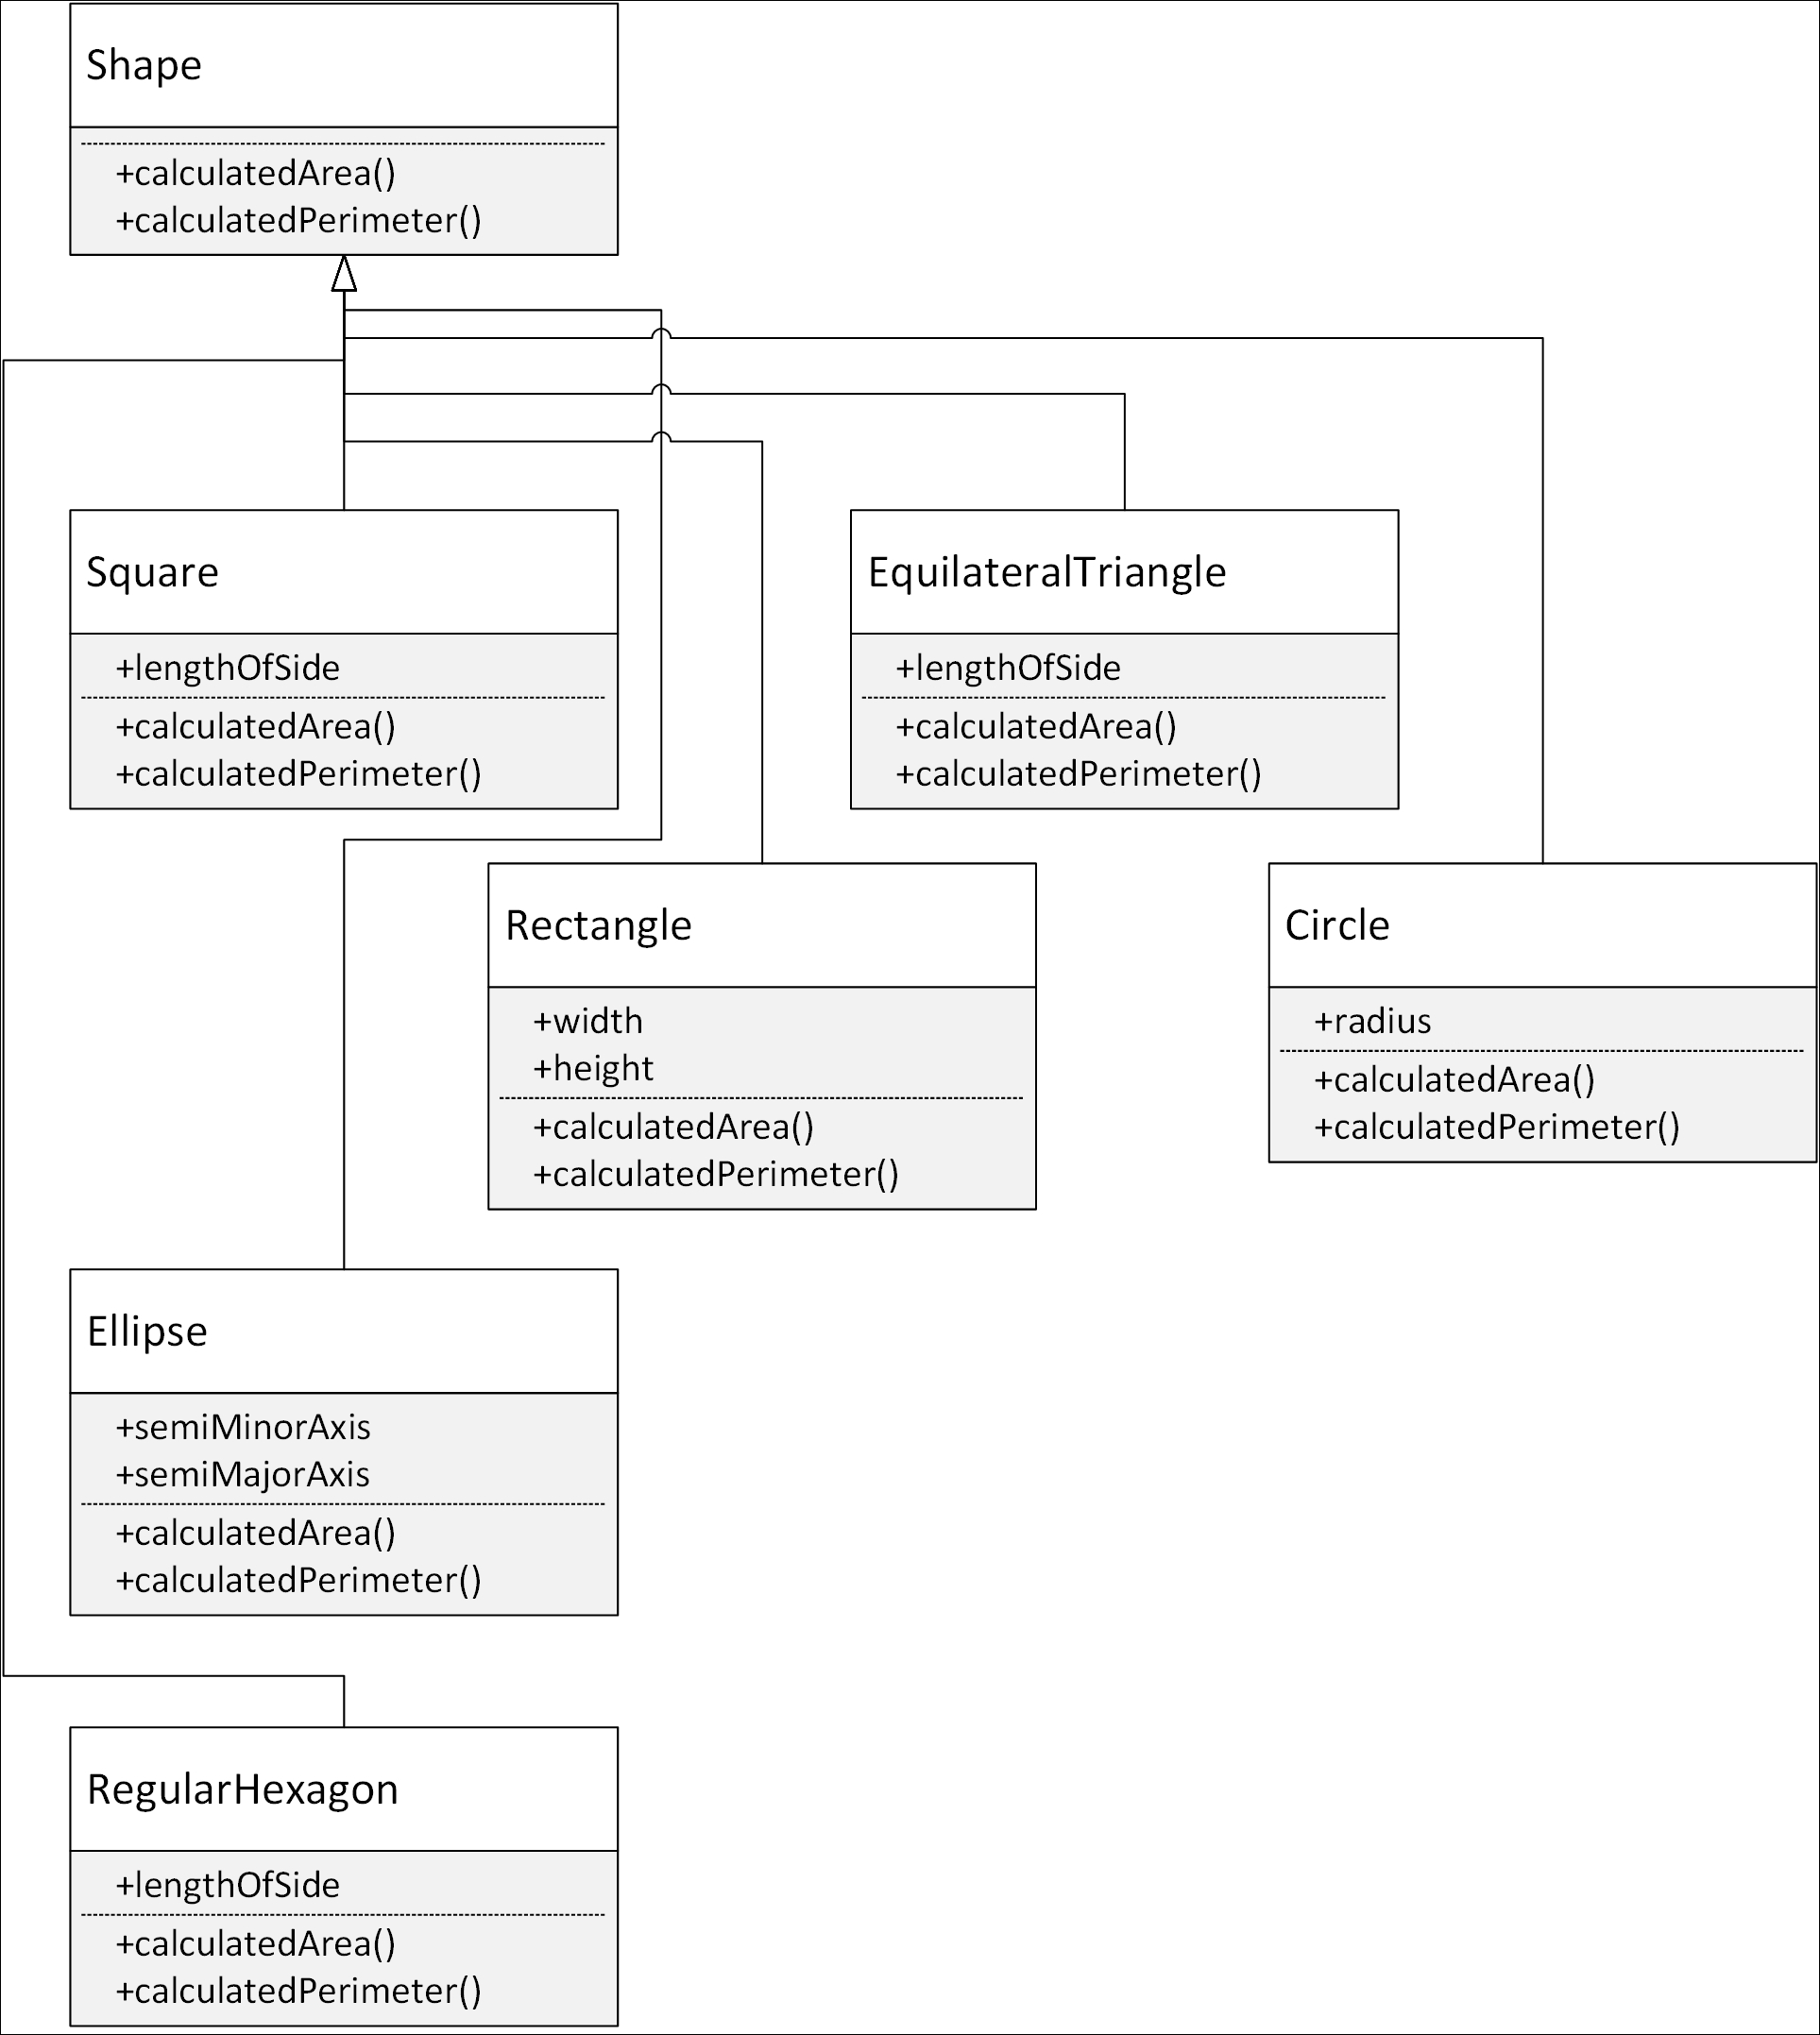 Organizing classes with UML diagrams